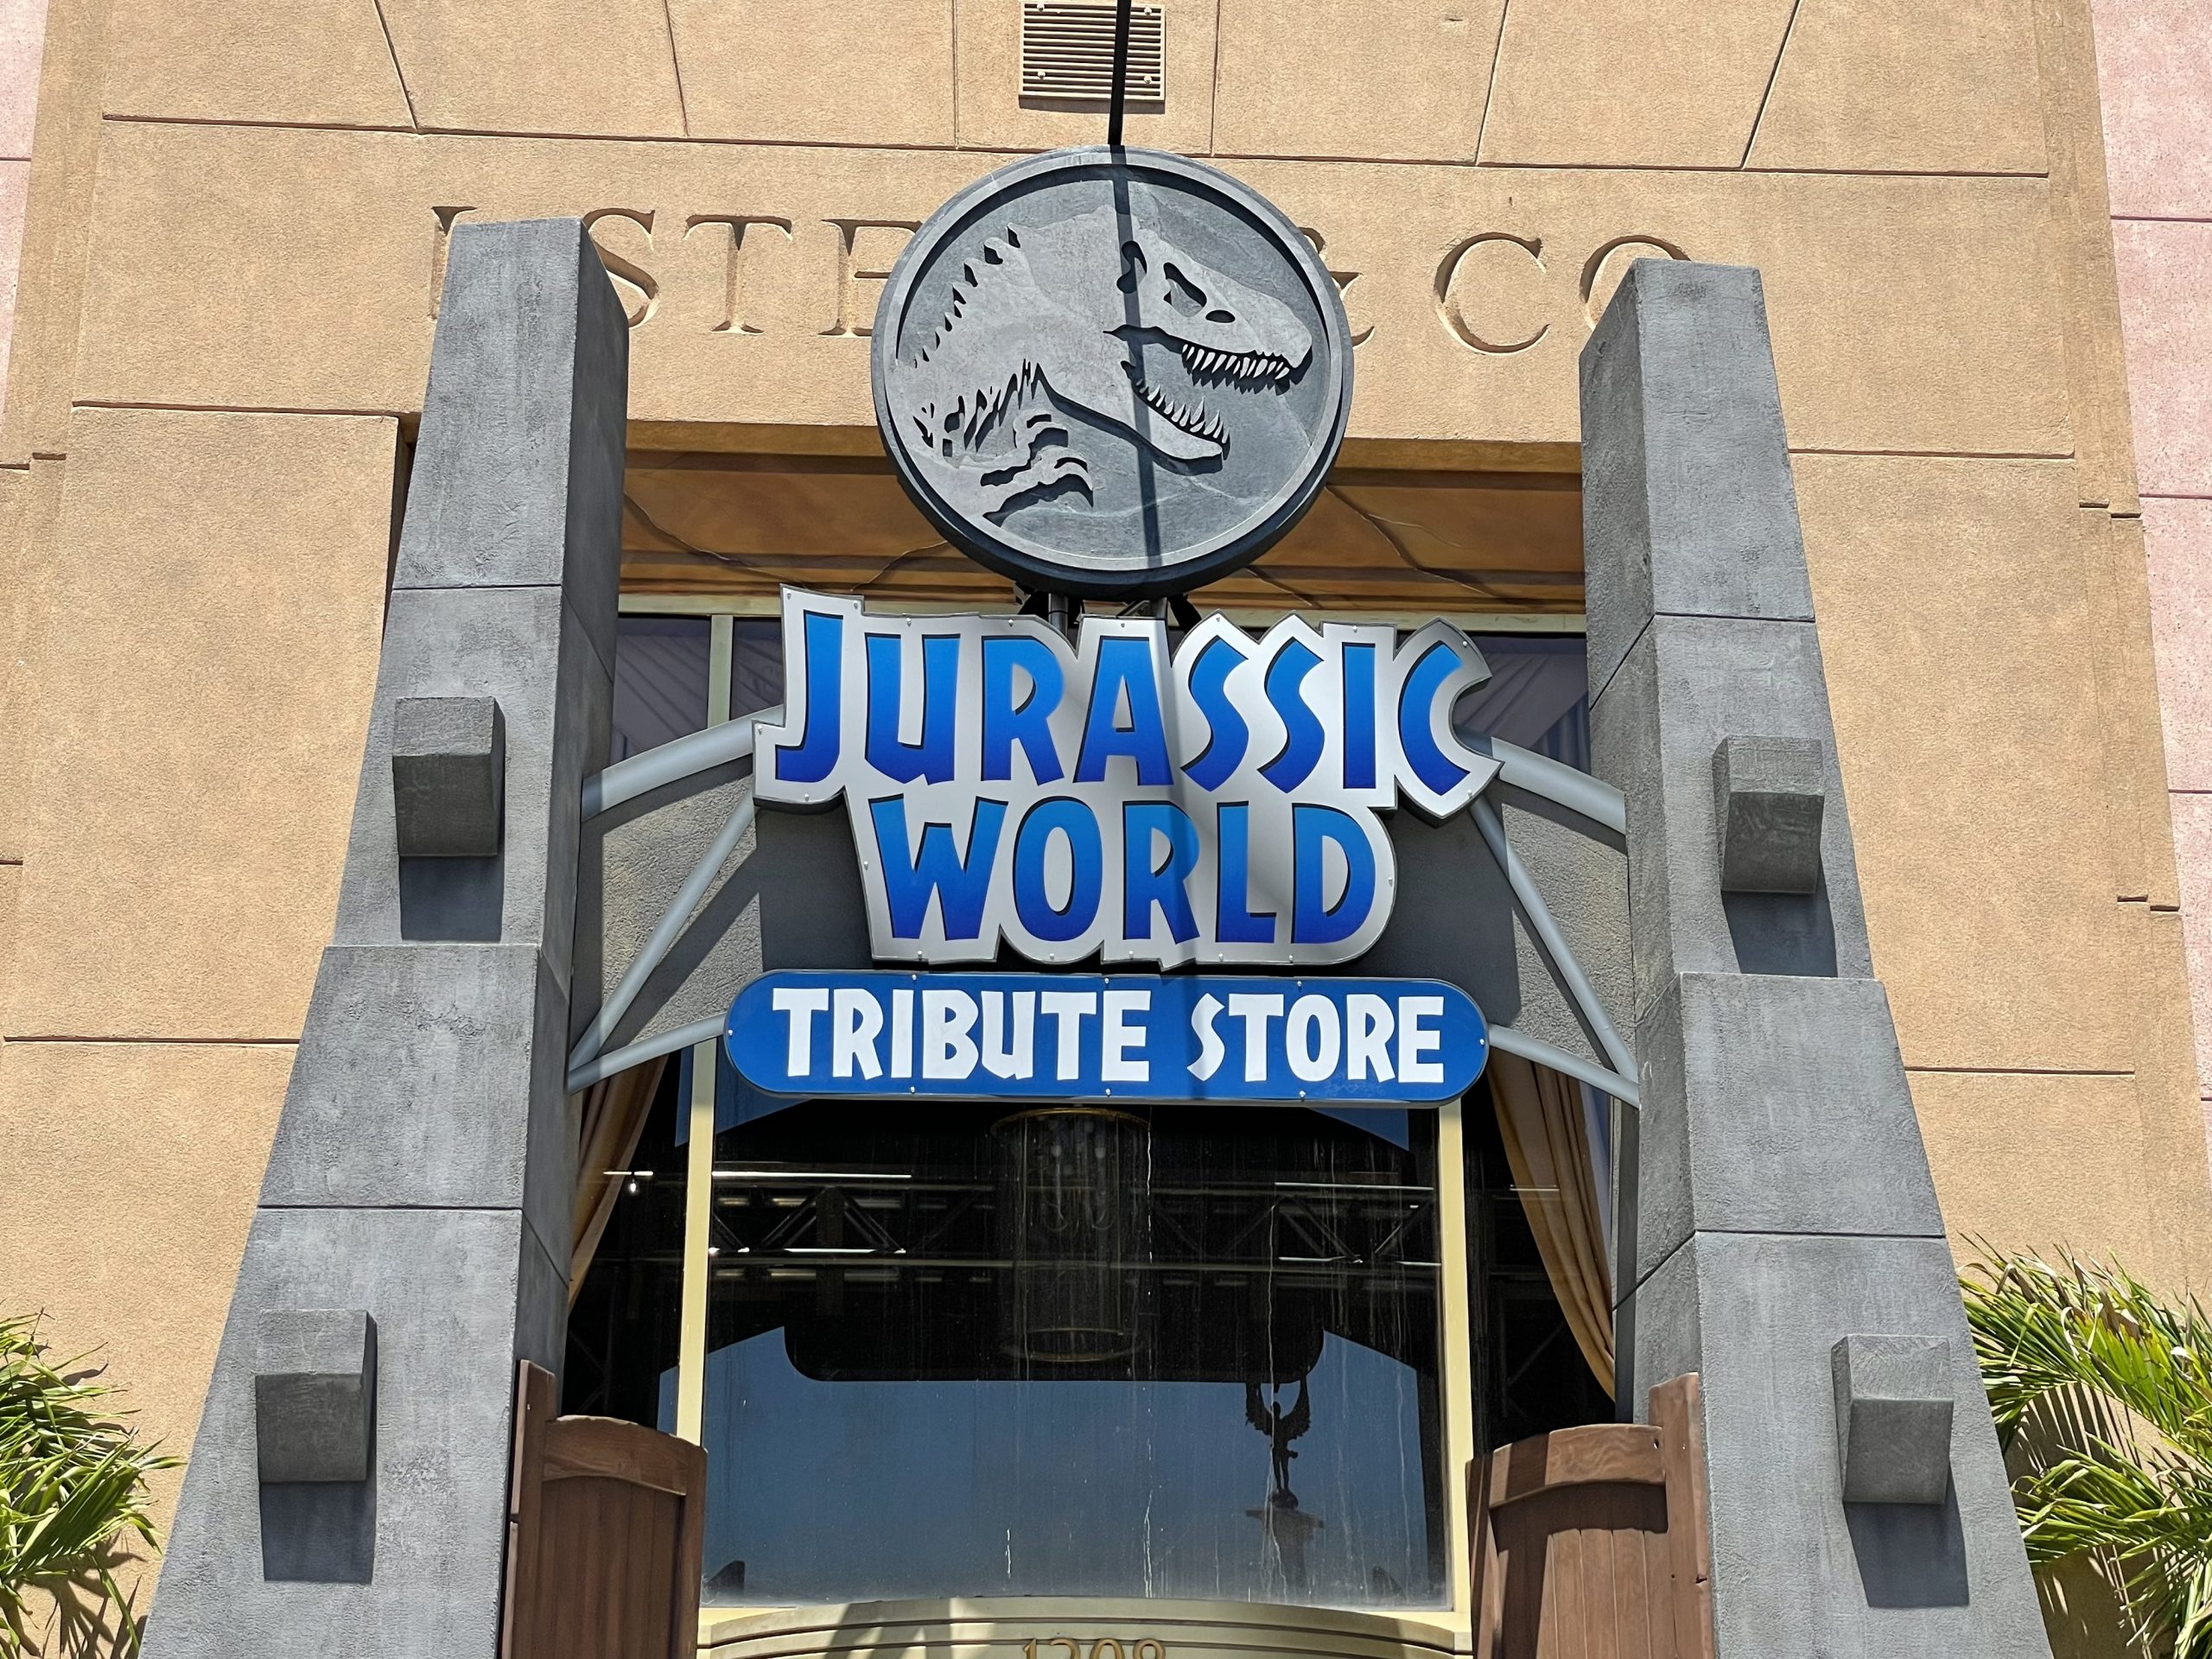 Jurassic World Tribute Store coming to Universal Studios Florida